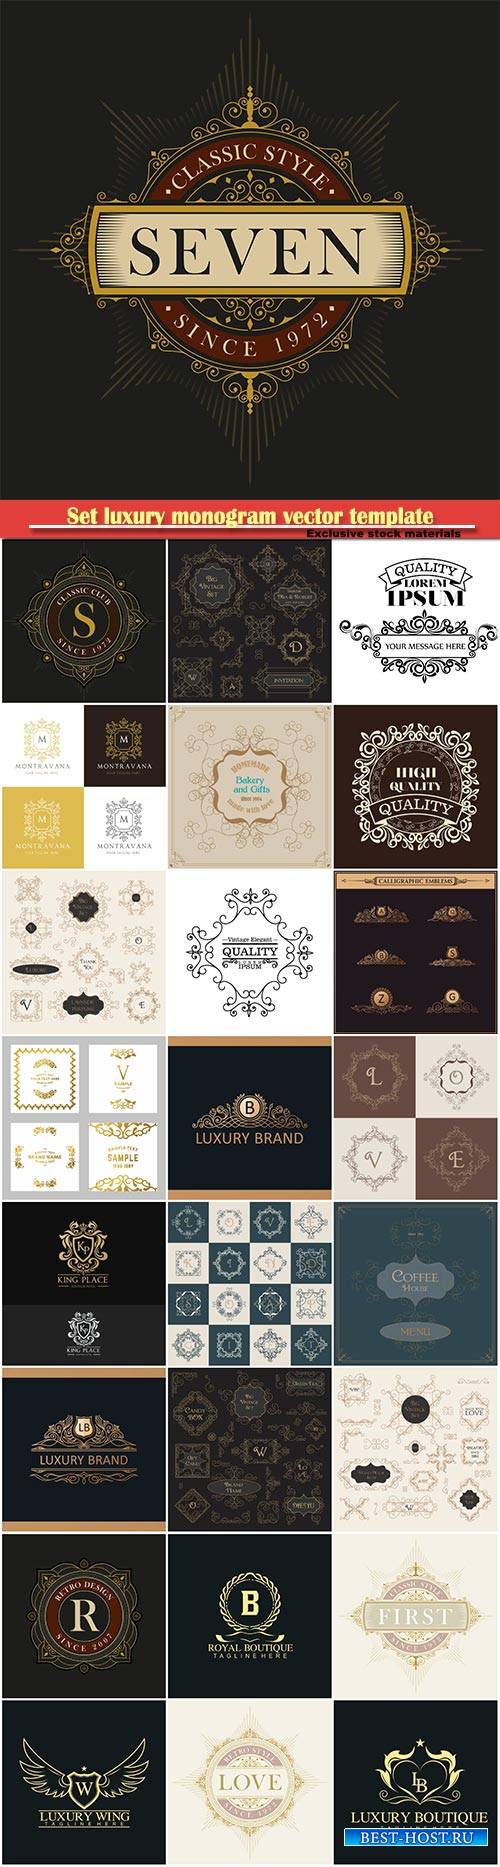 Set luxury monogram vector template, logos, badges, symbols